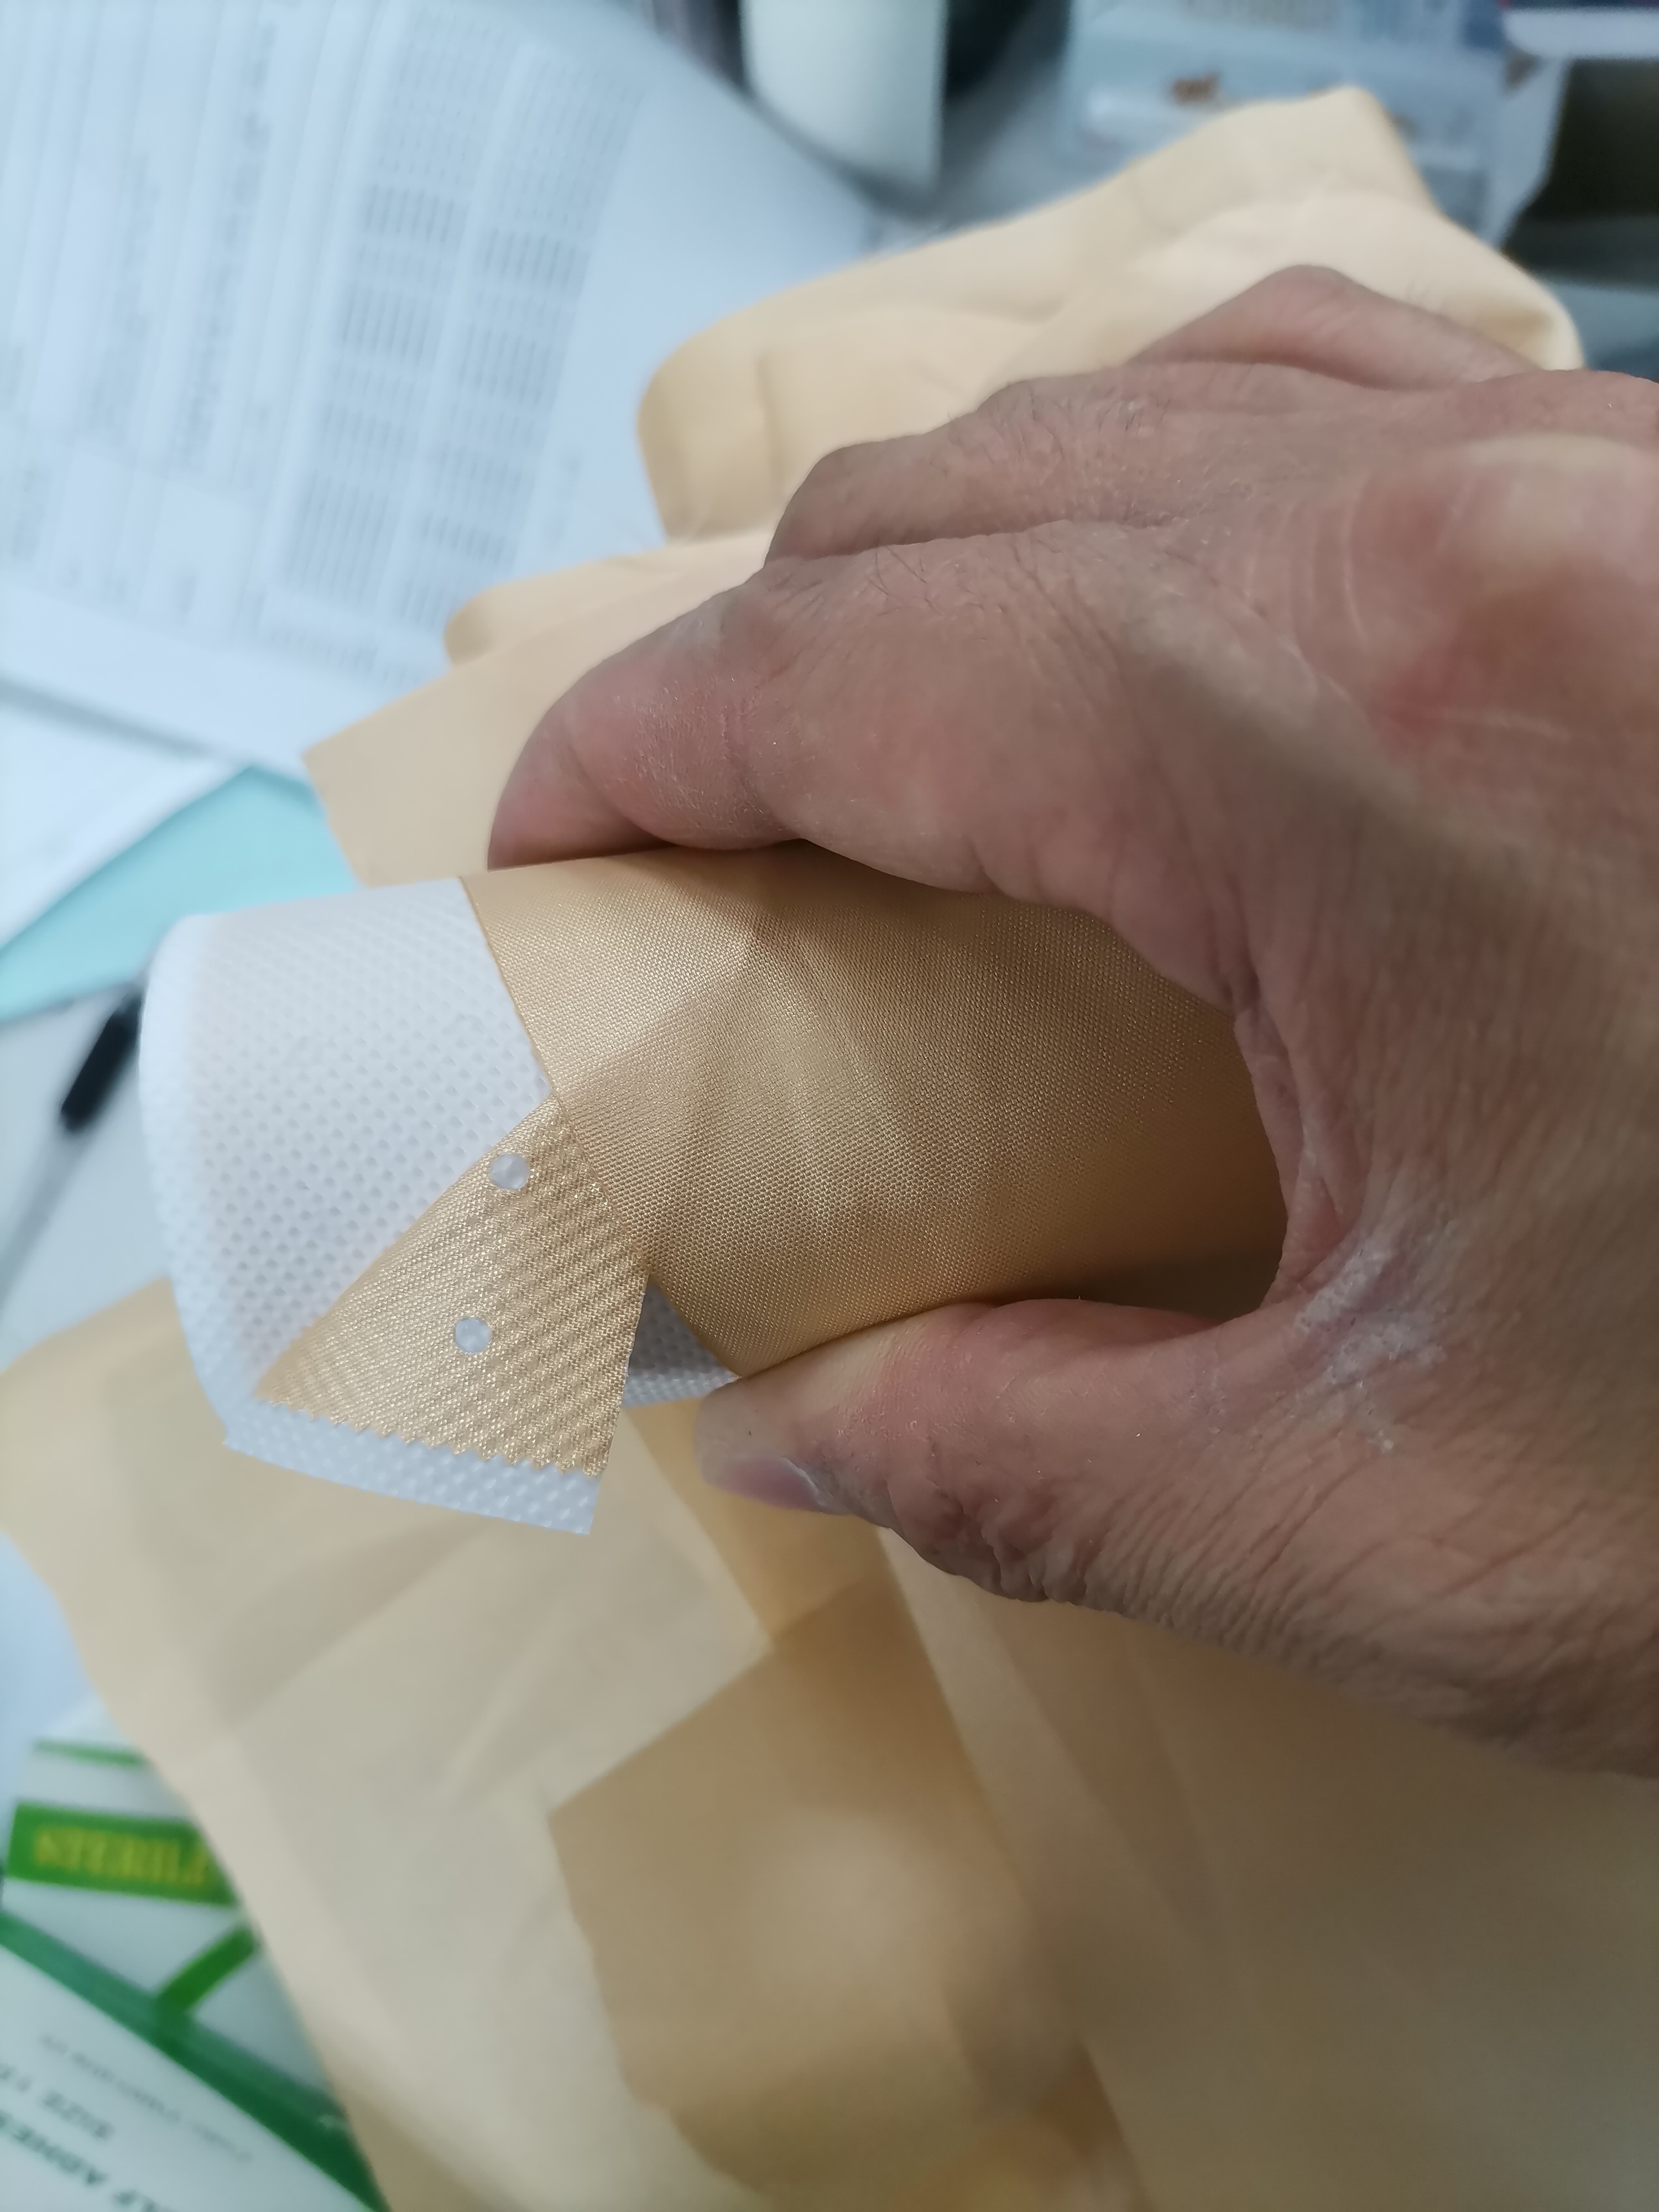 Skin color medical tape raw material tape jumbo rolls